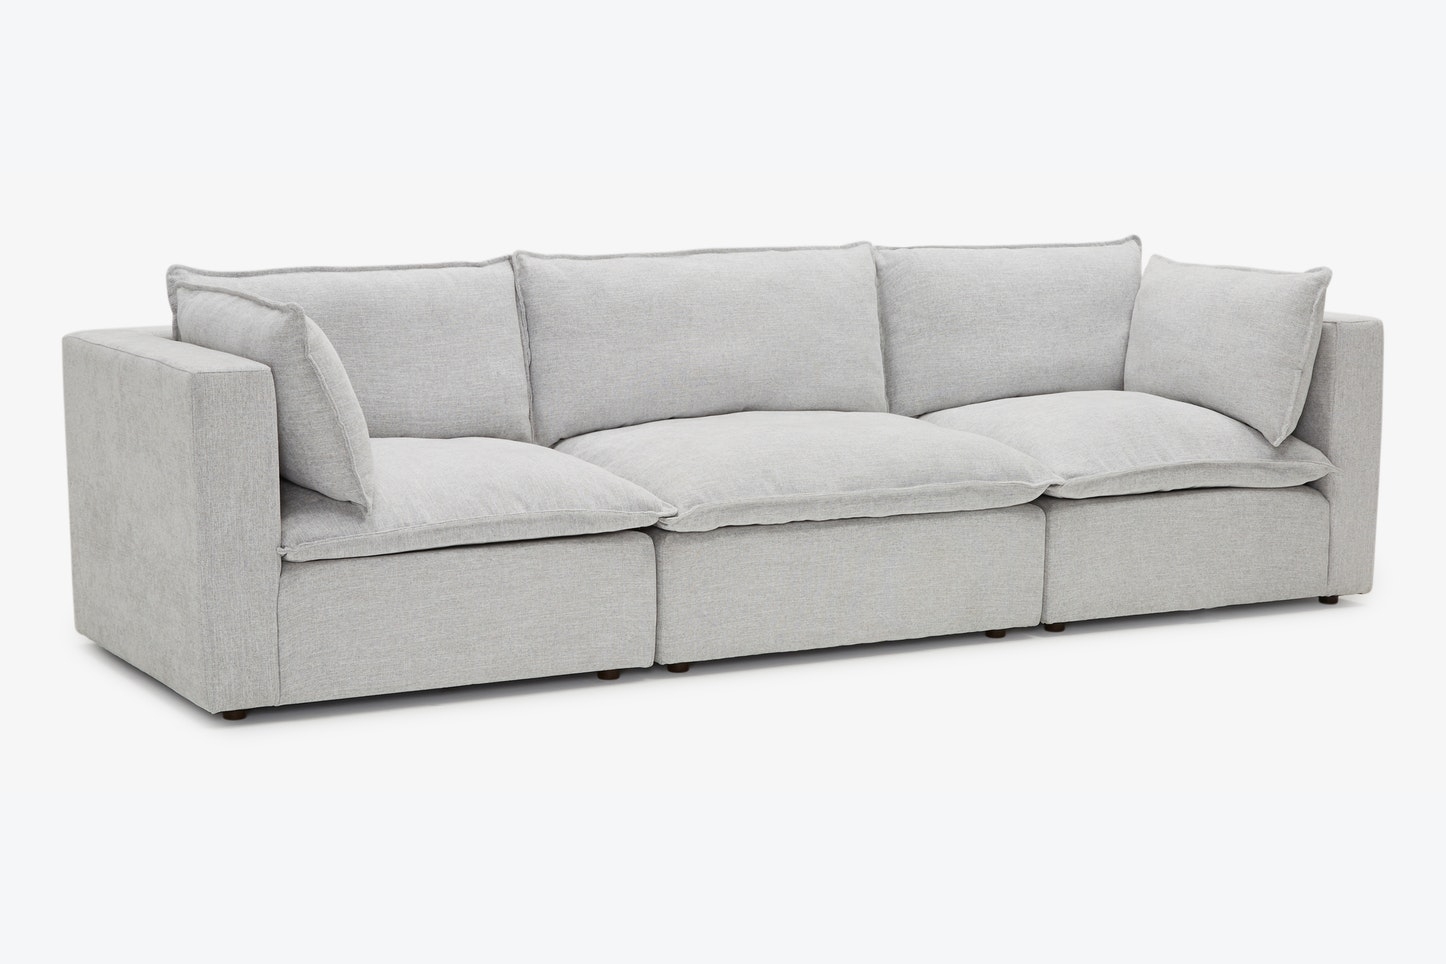 Haine Modular Sofa - Image 2